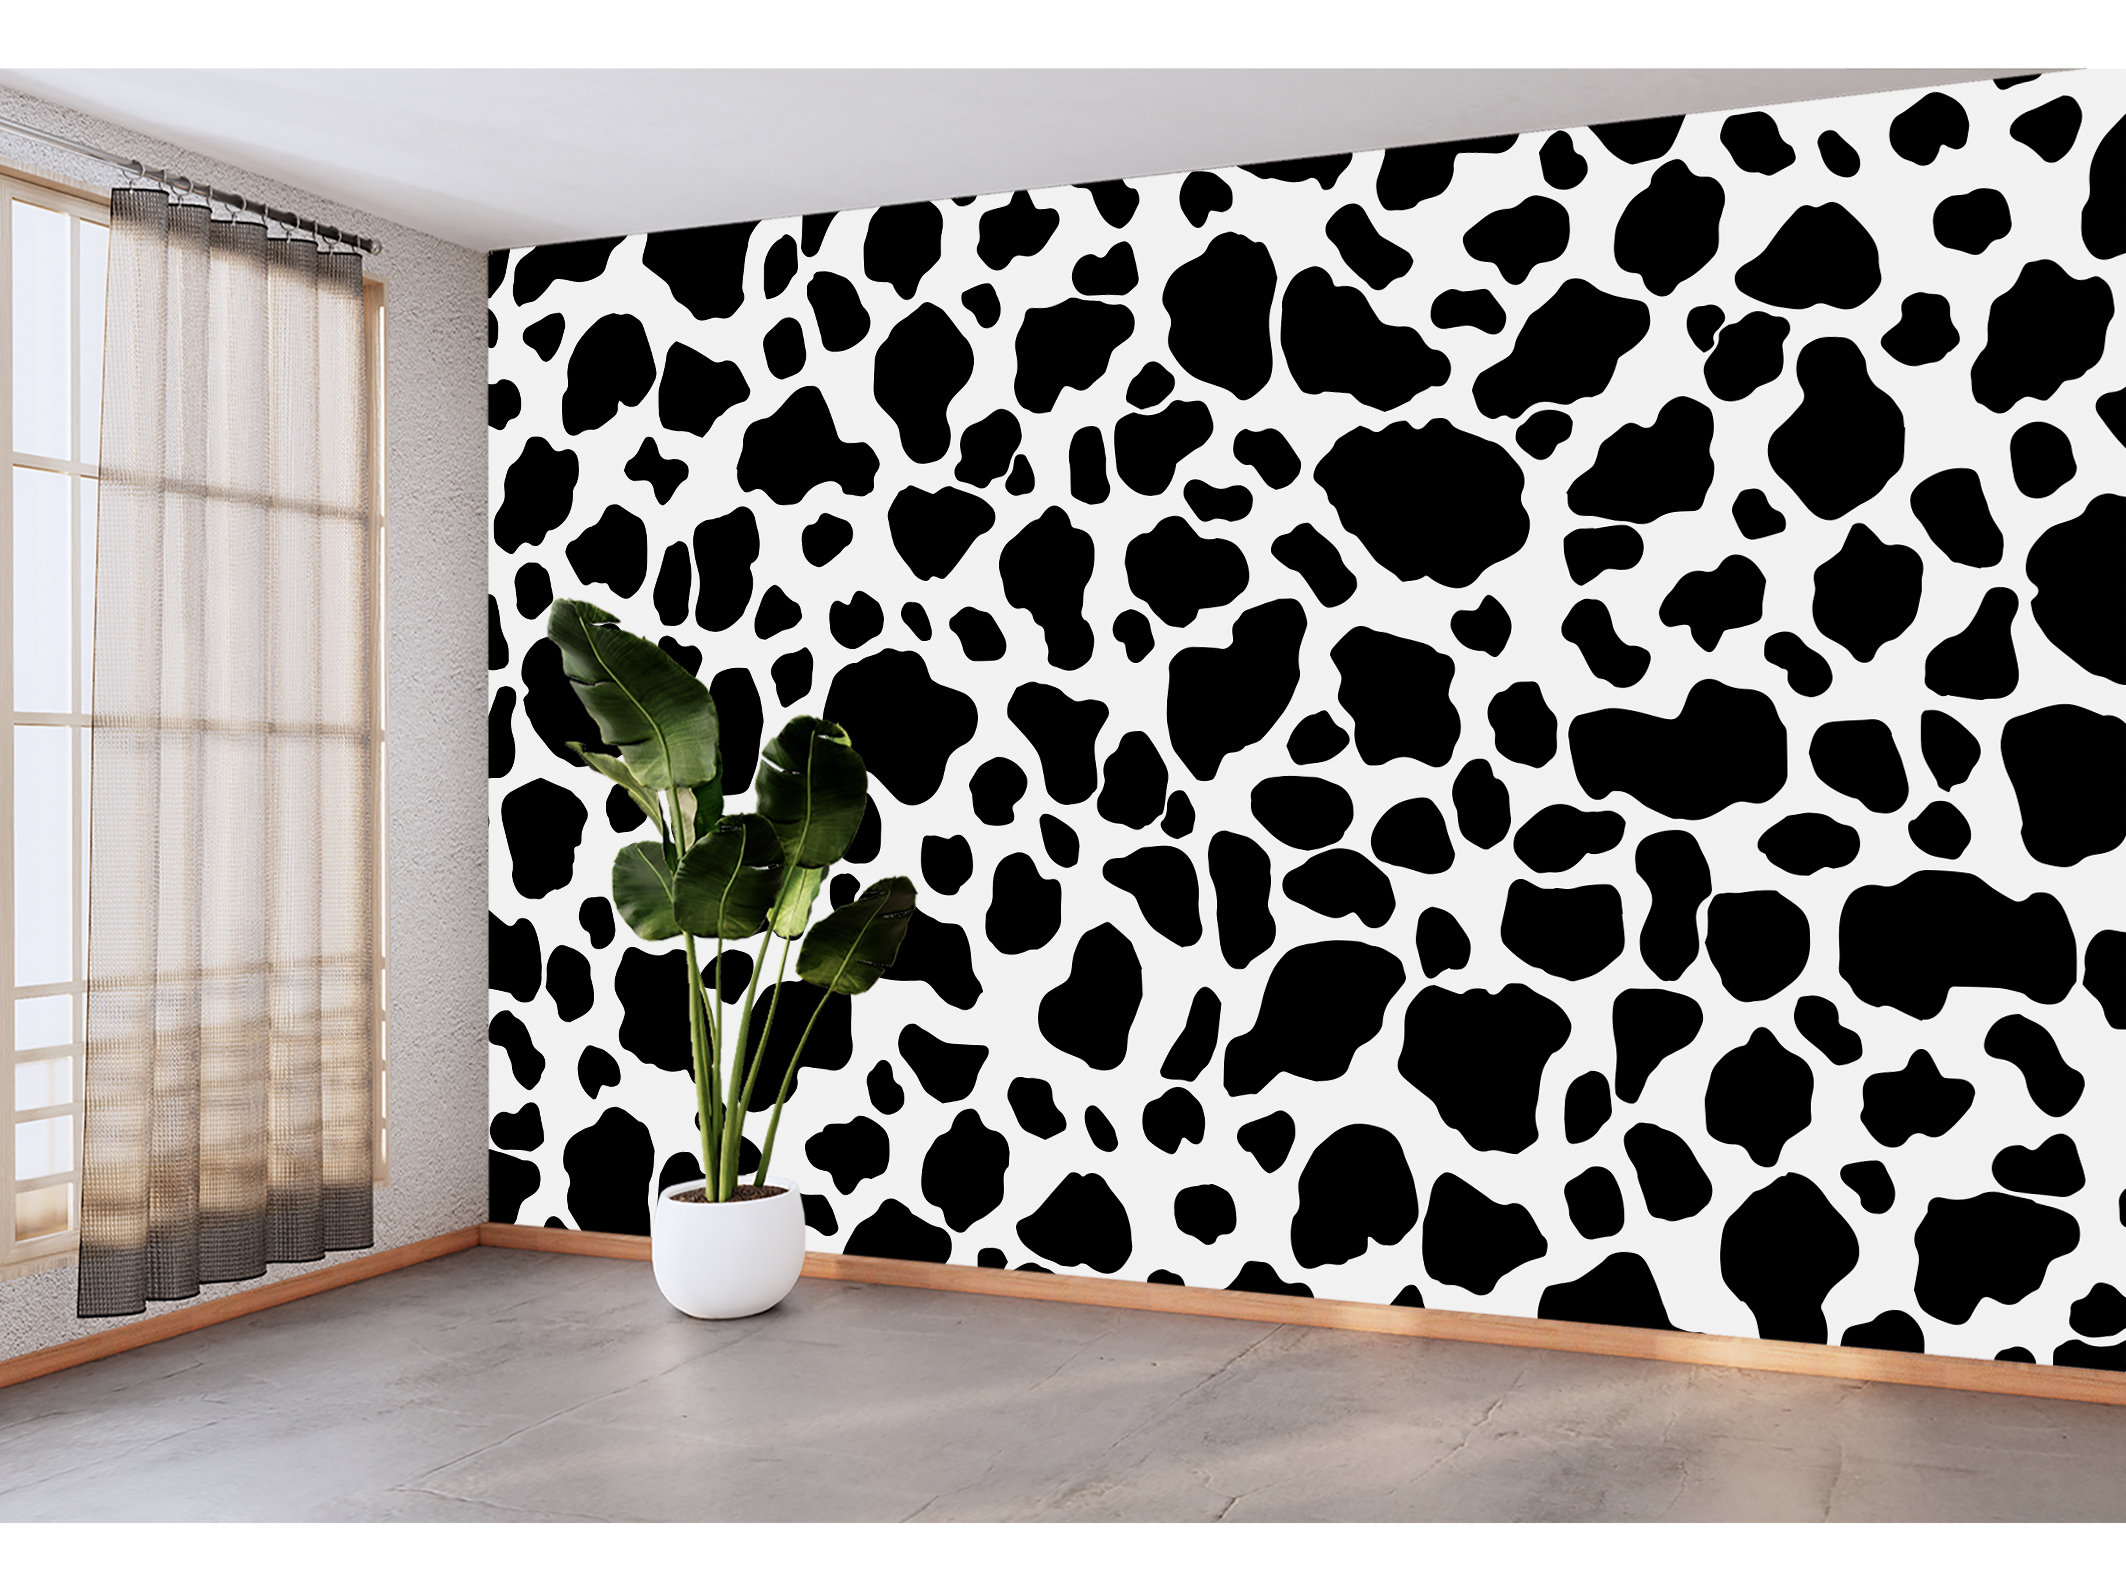 AMIYA Cow Print Peel and Stick Wallpaper 17.7 X 120 Black and